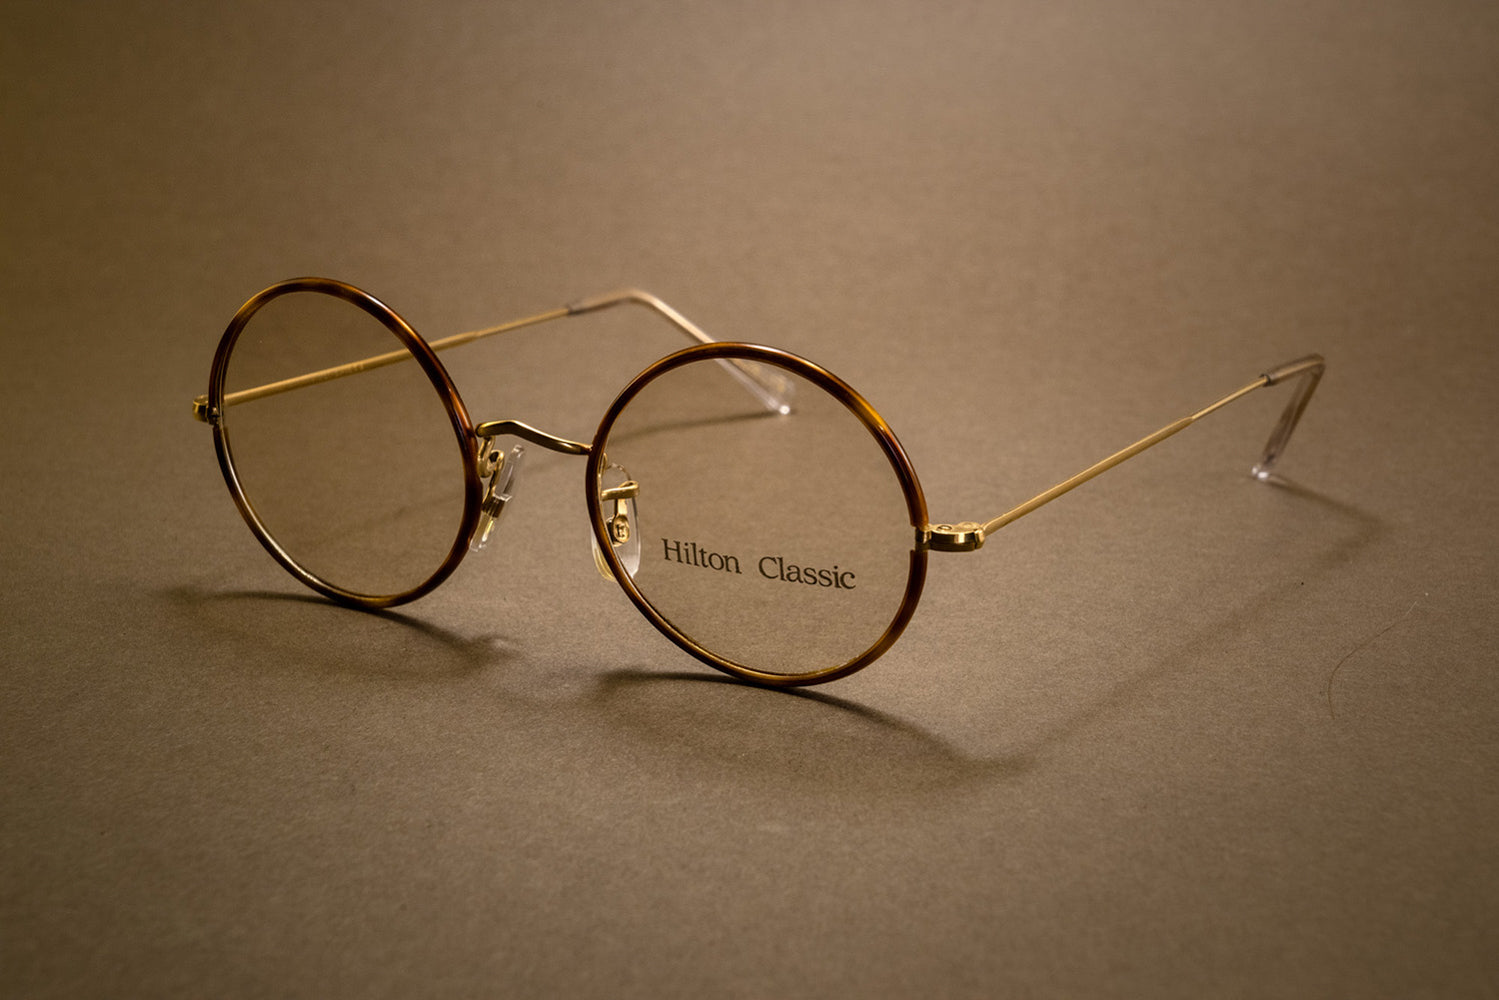 Hilton Classic 2 / 14kt Gold glasses